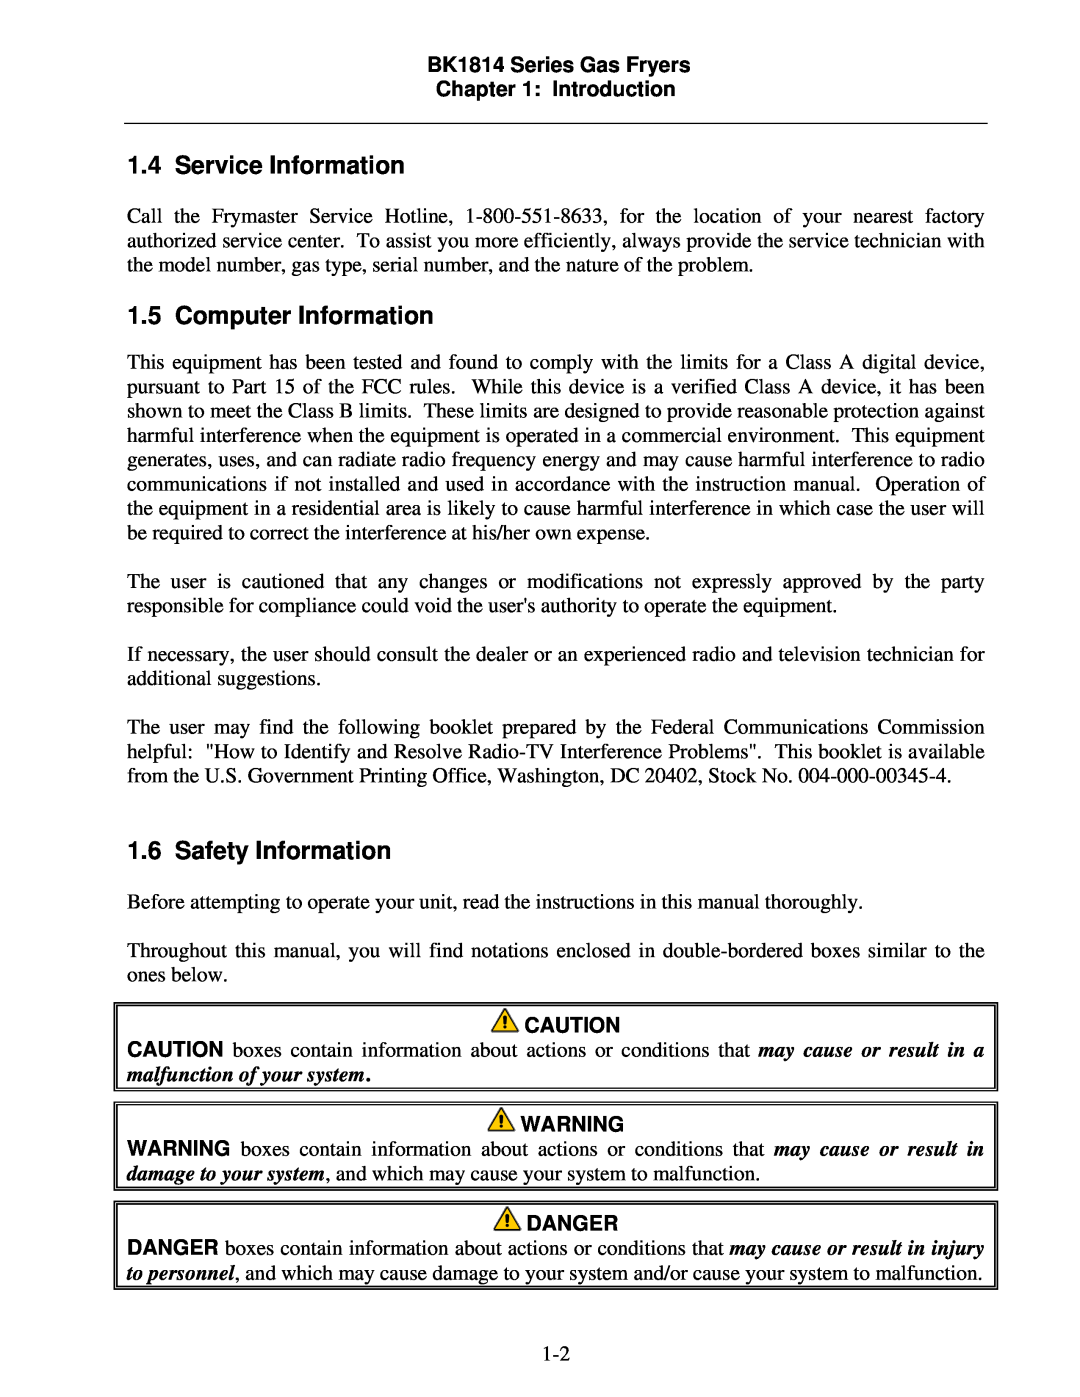 Frymaster Service Information, Computer Information, Safety Information, BK1814 Series Gas Fryers Introduction, Danger 